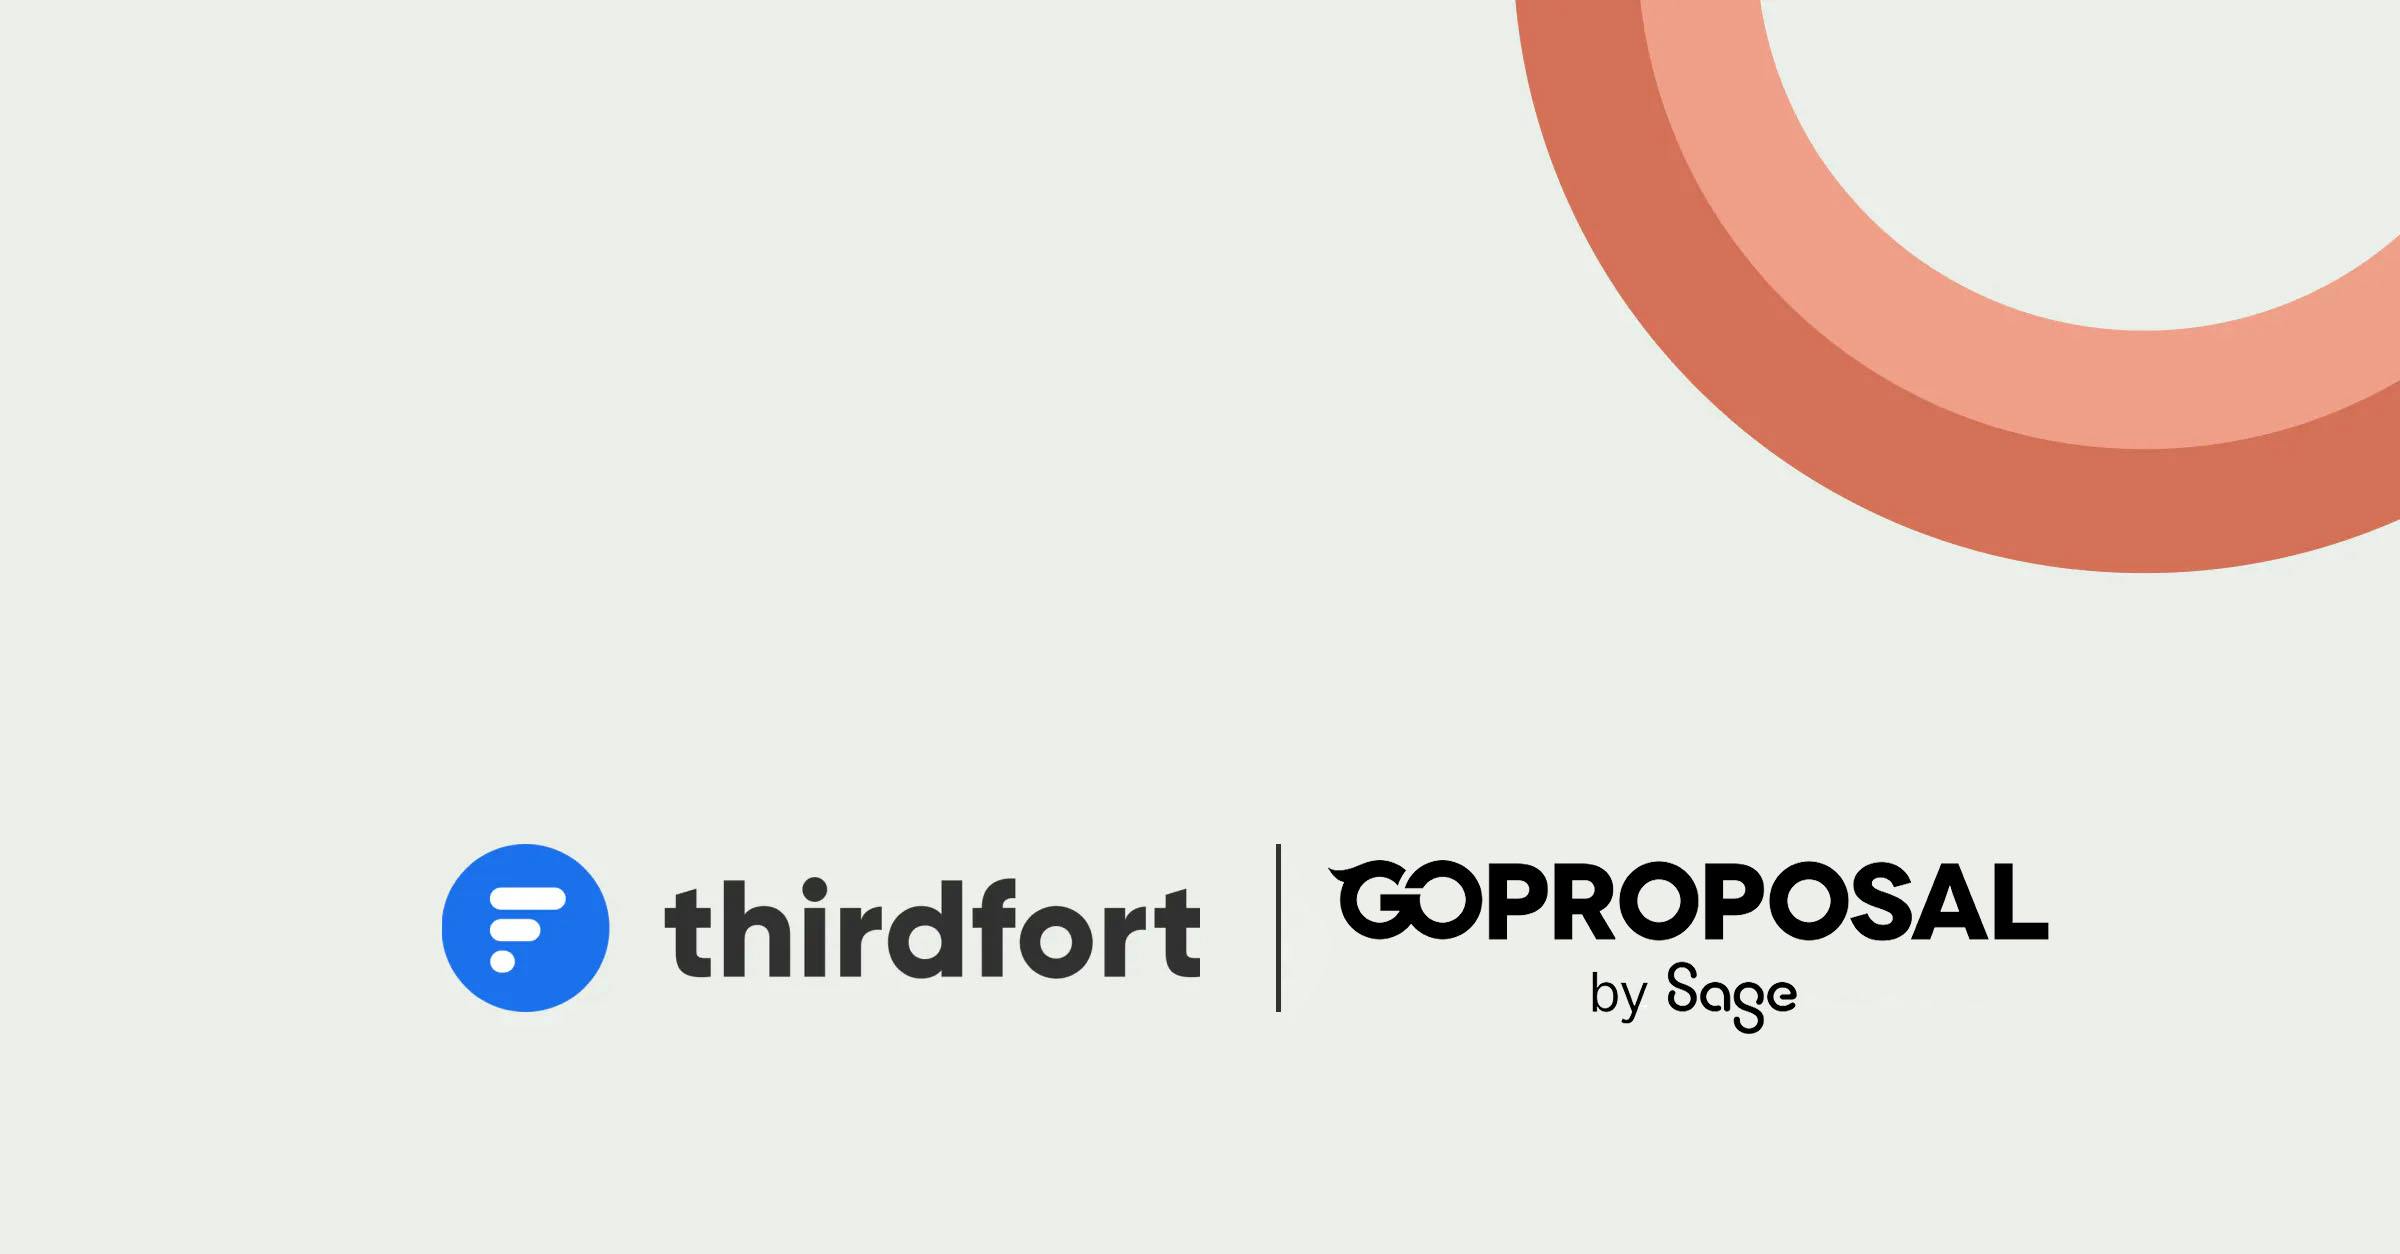 Thirdfort and GoProposal logo lock up